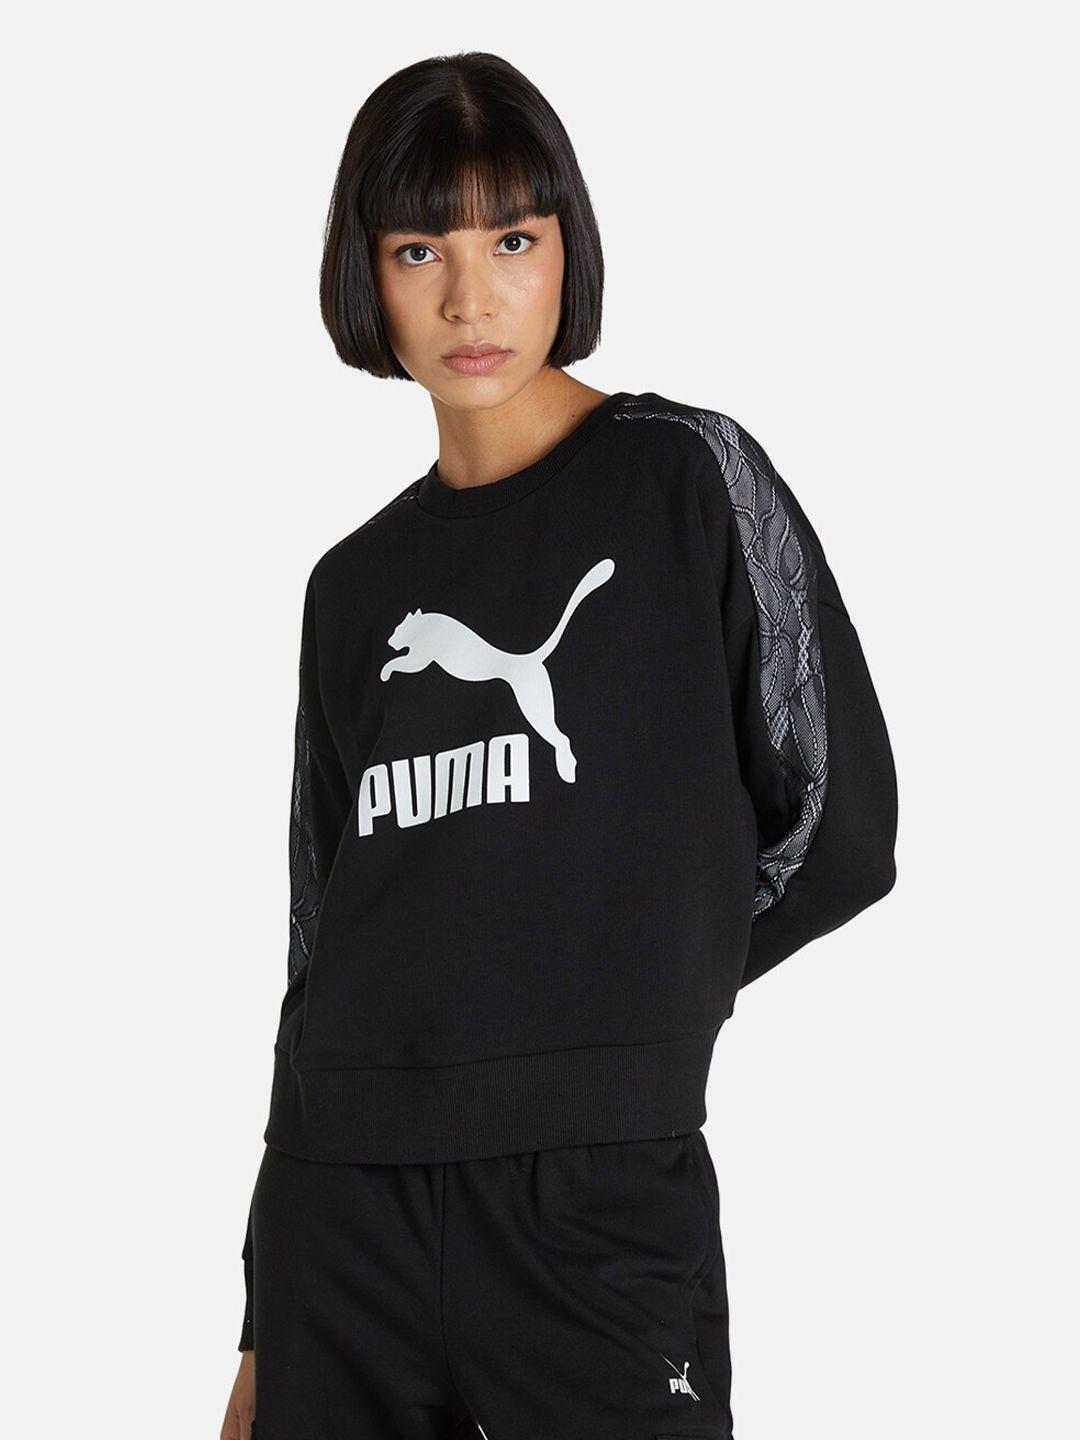 puma women black & white luxe printed sweatshirt